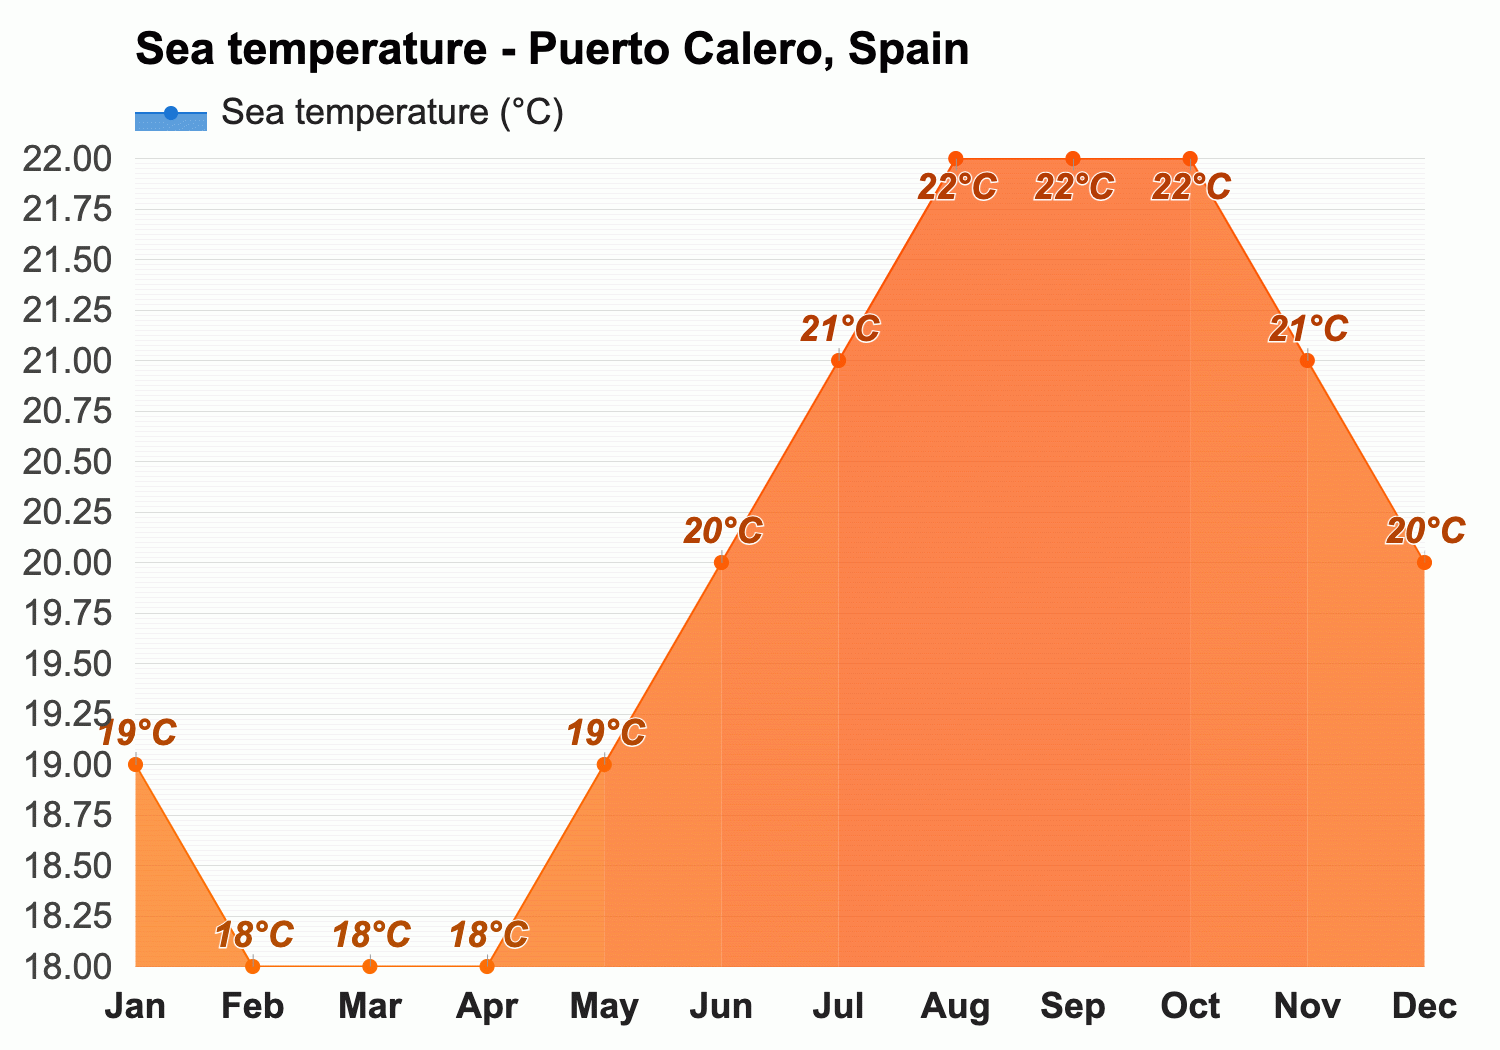 February Weather forecast - Winter forecast - Puerto Calero, Spain